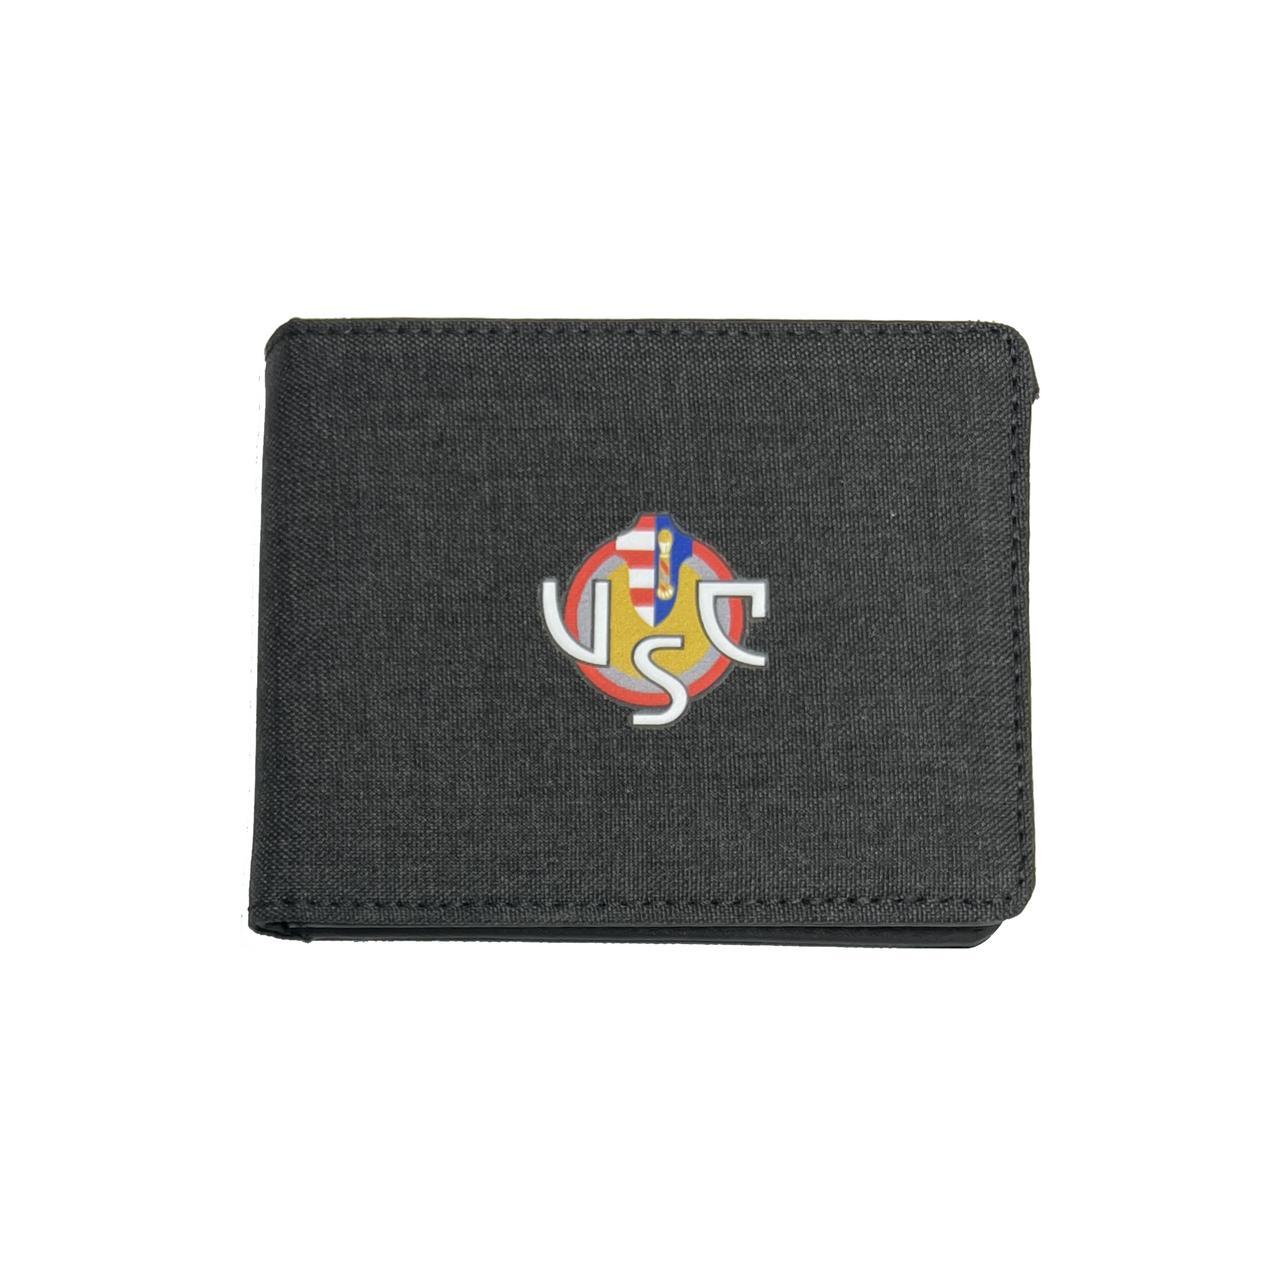 U.S. Cremonese portafoglio nero con logo RIFD